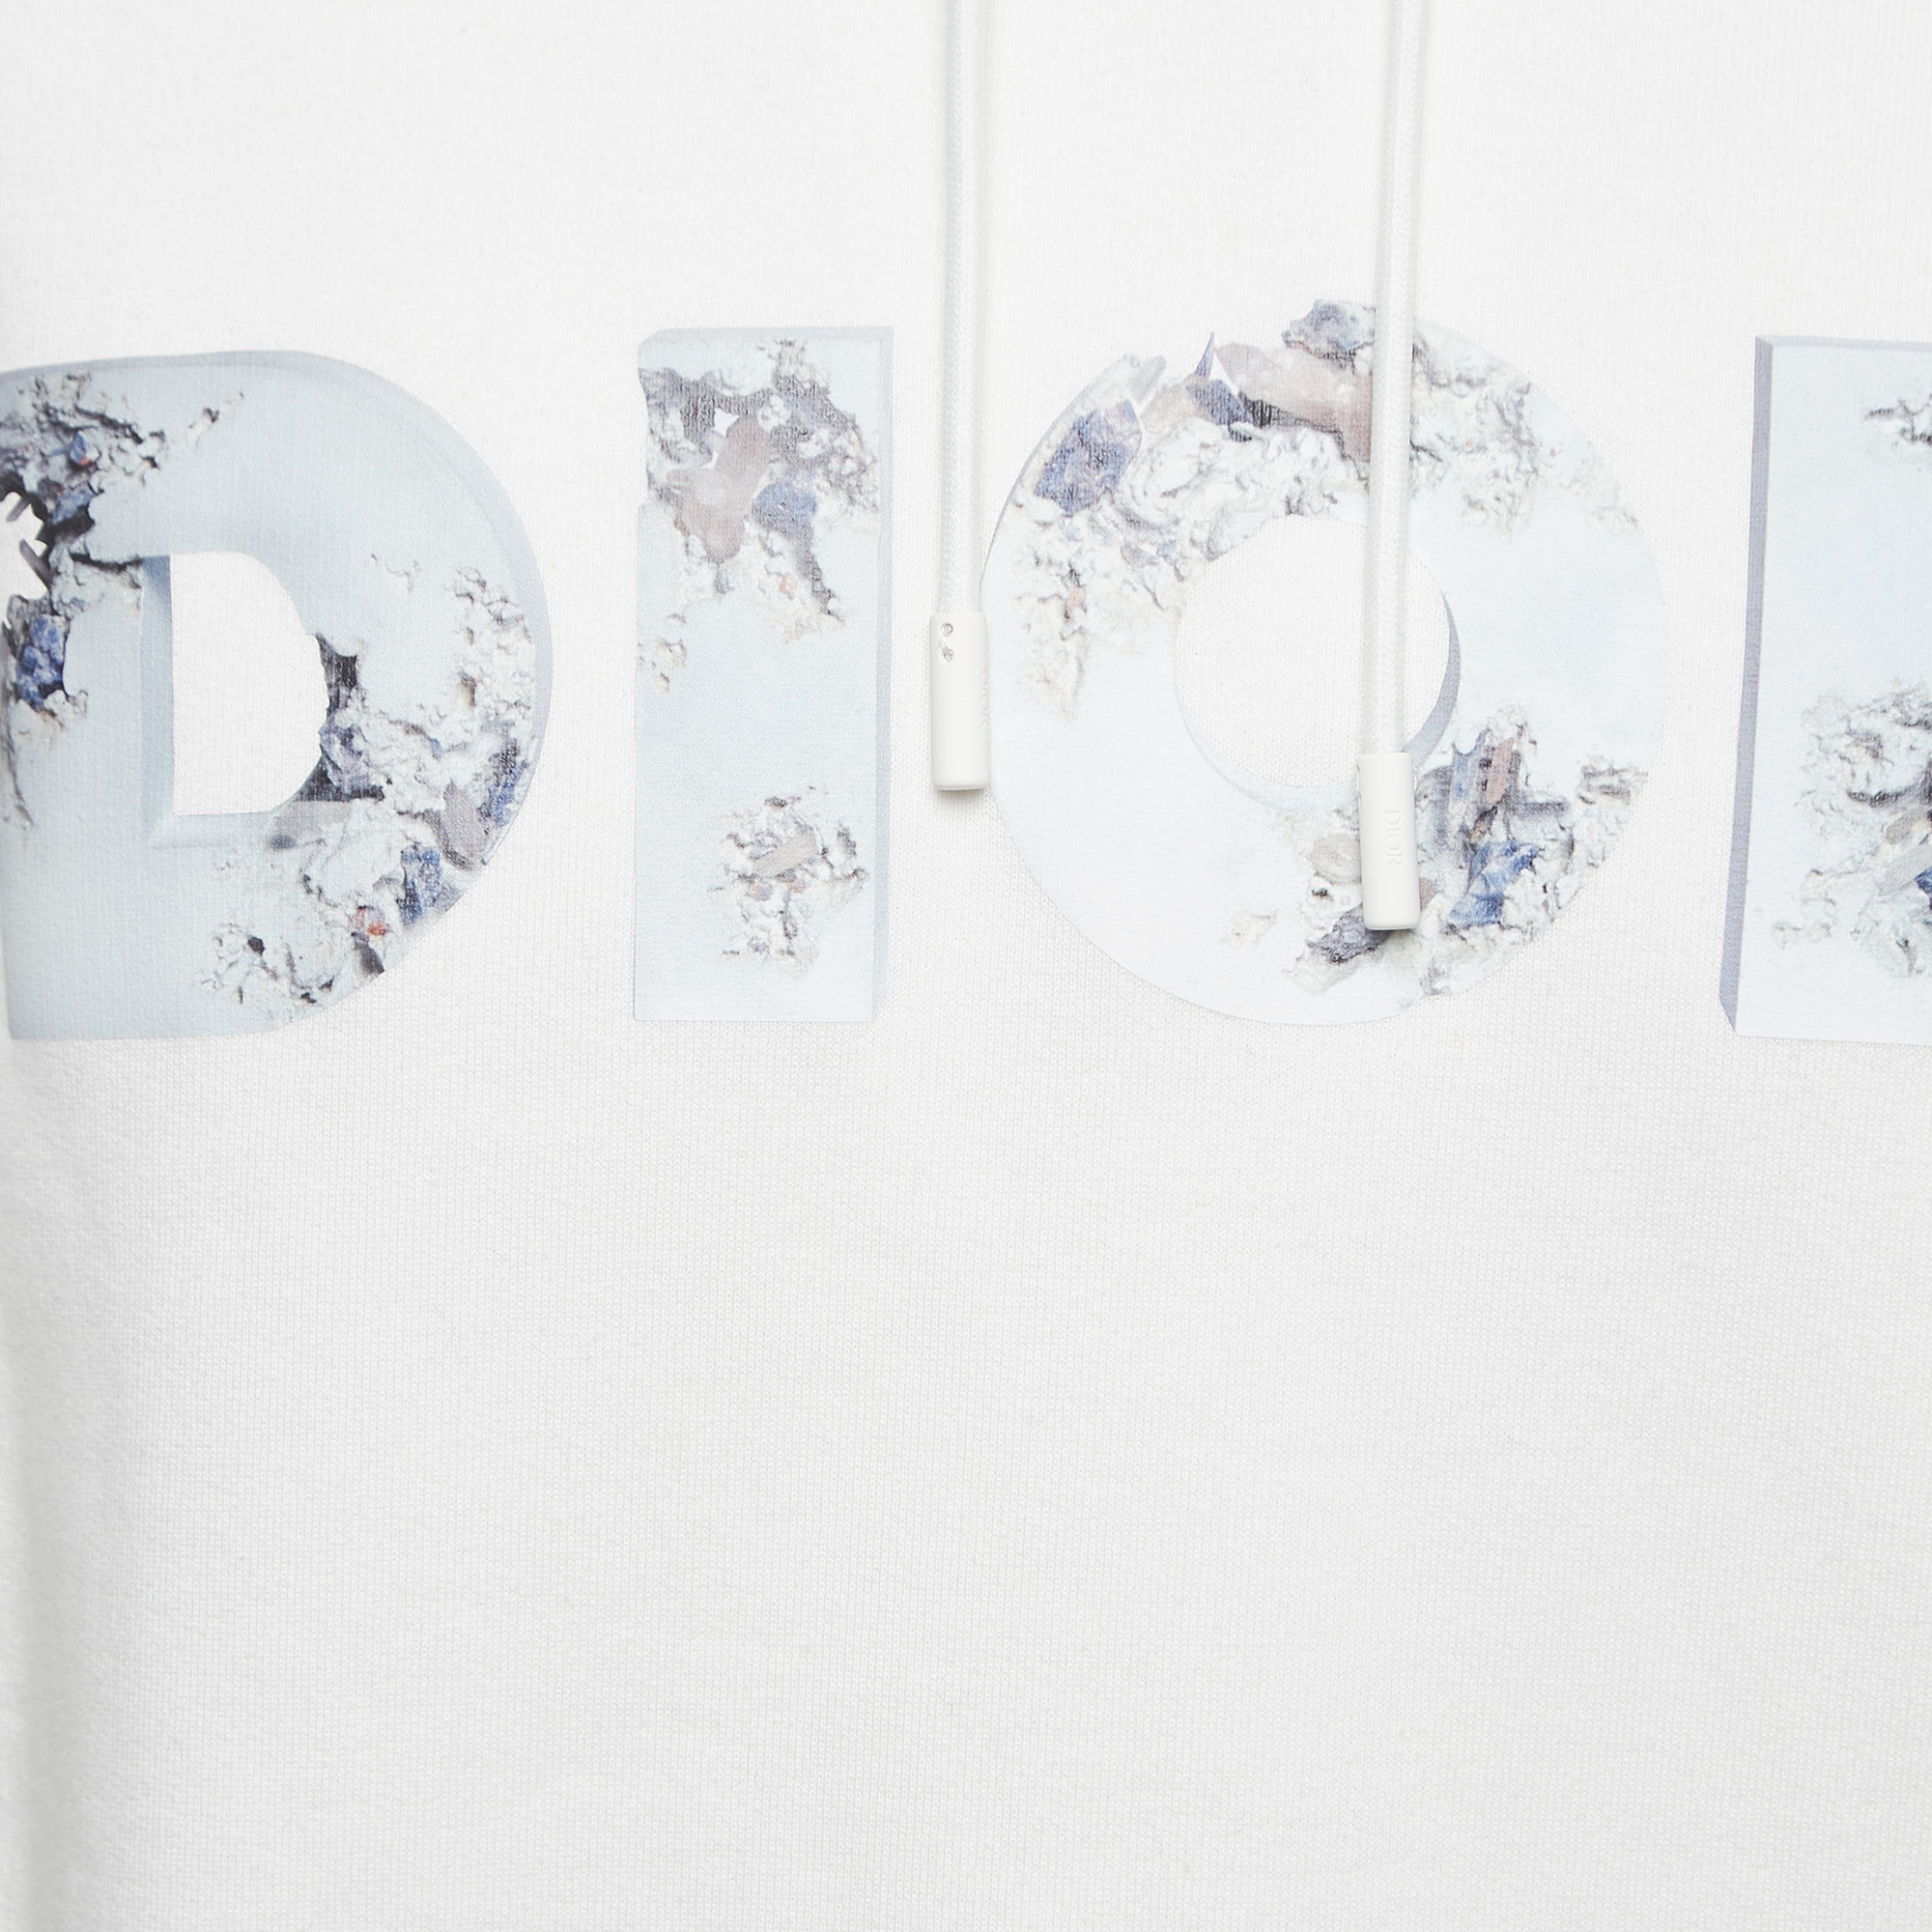 Dior Homme X Daniel Arsham White 3D Print Cotton Hoodie M